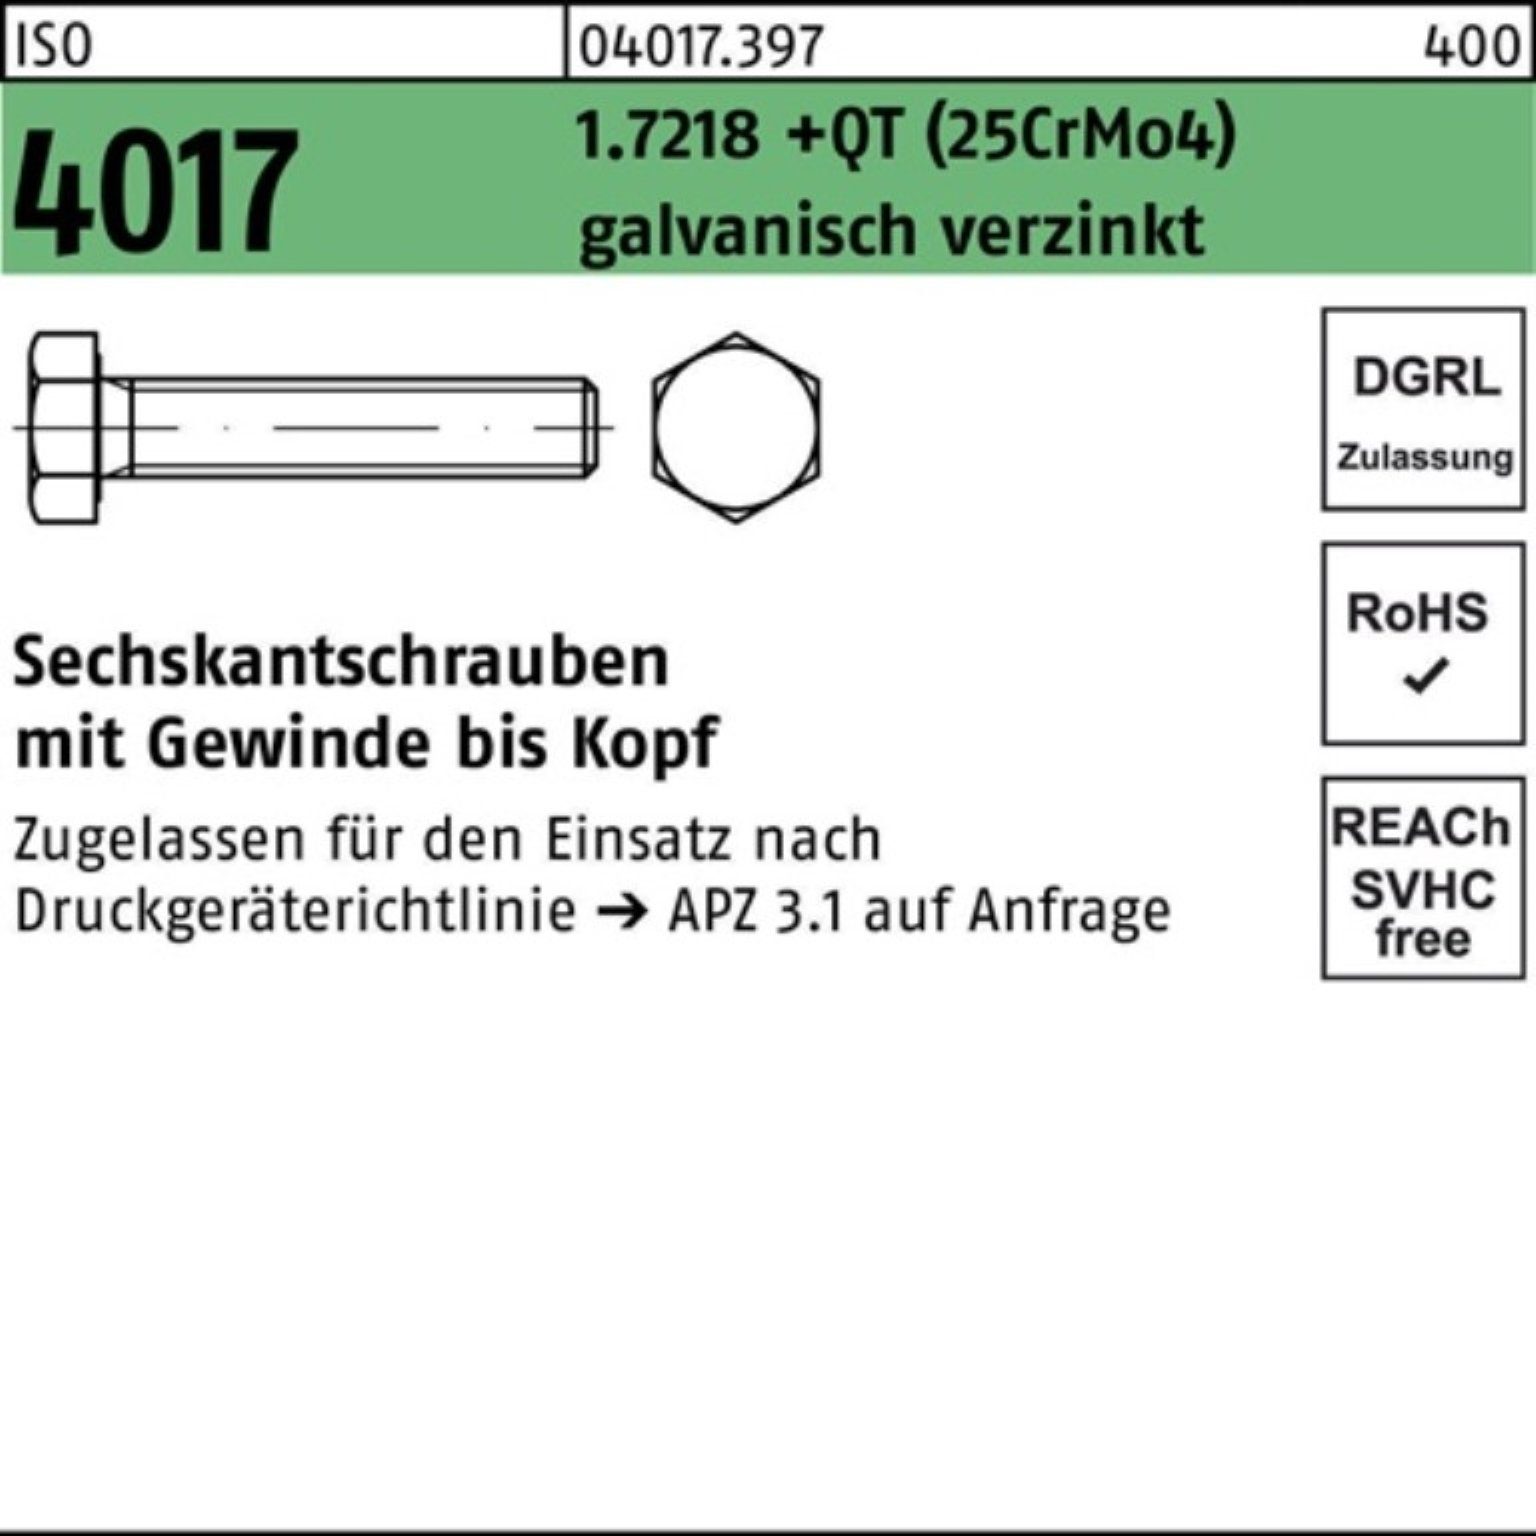 Pack 4017 1.7218 ISO (25CrMo4) 100er +QT Bufab VG M20x150 Sechskantschraube Sechskantschraube